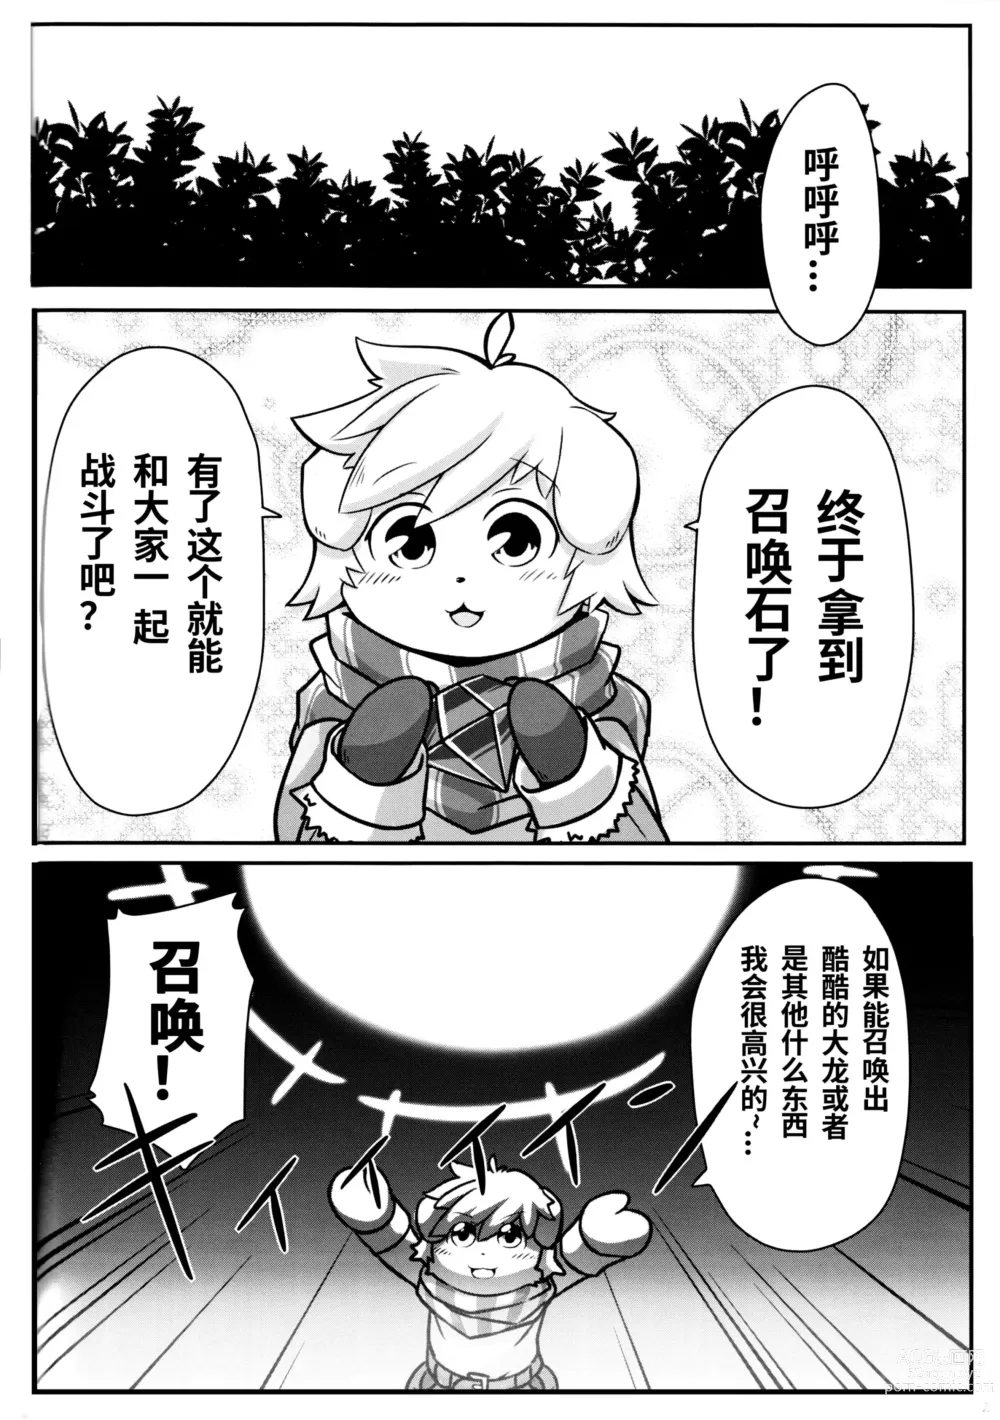 Page 3 of doujinshi SUMMON PANIC